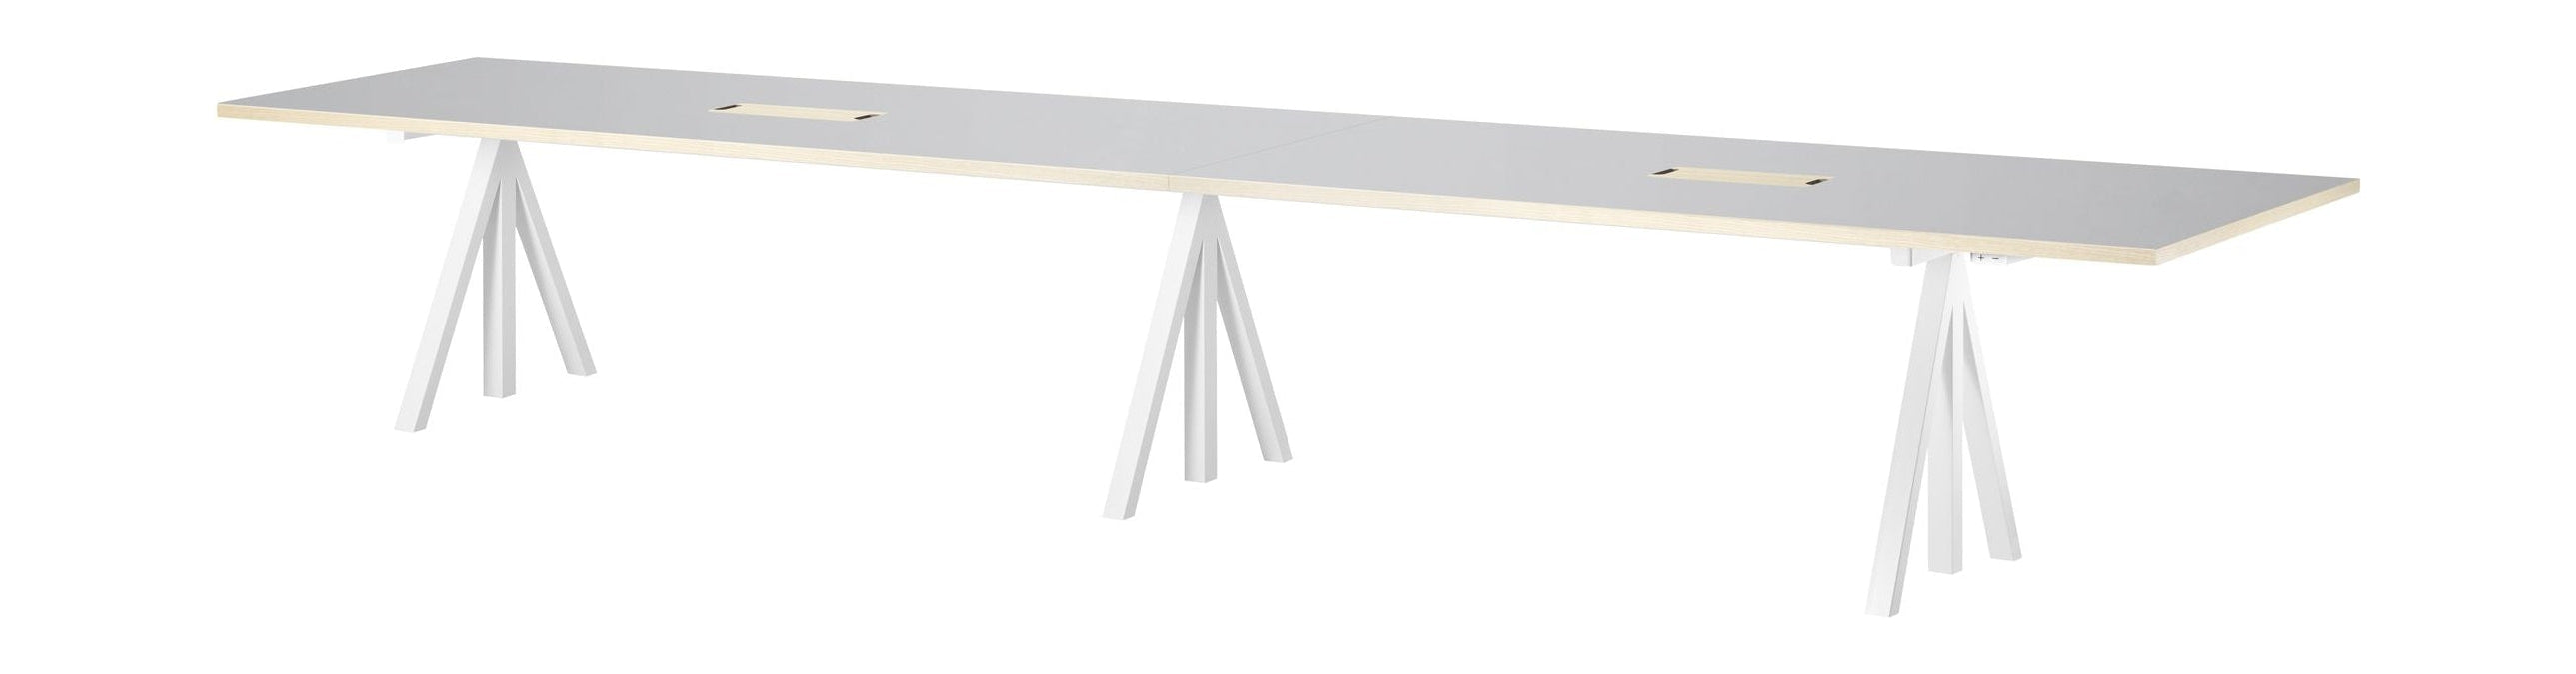 String Furniture Höjd justerbar konferens Tabell 90x180 cm, ljusgrå linoleum